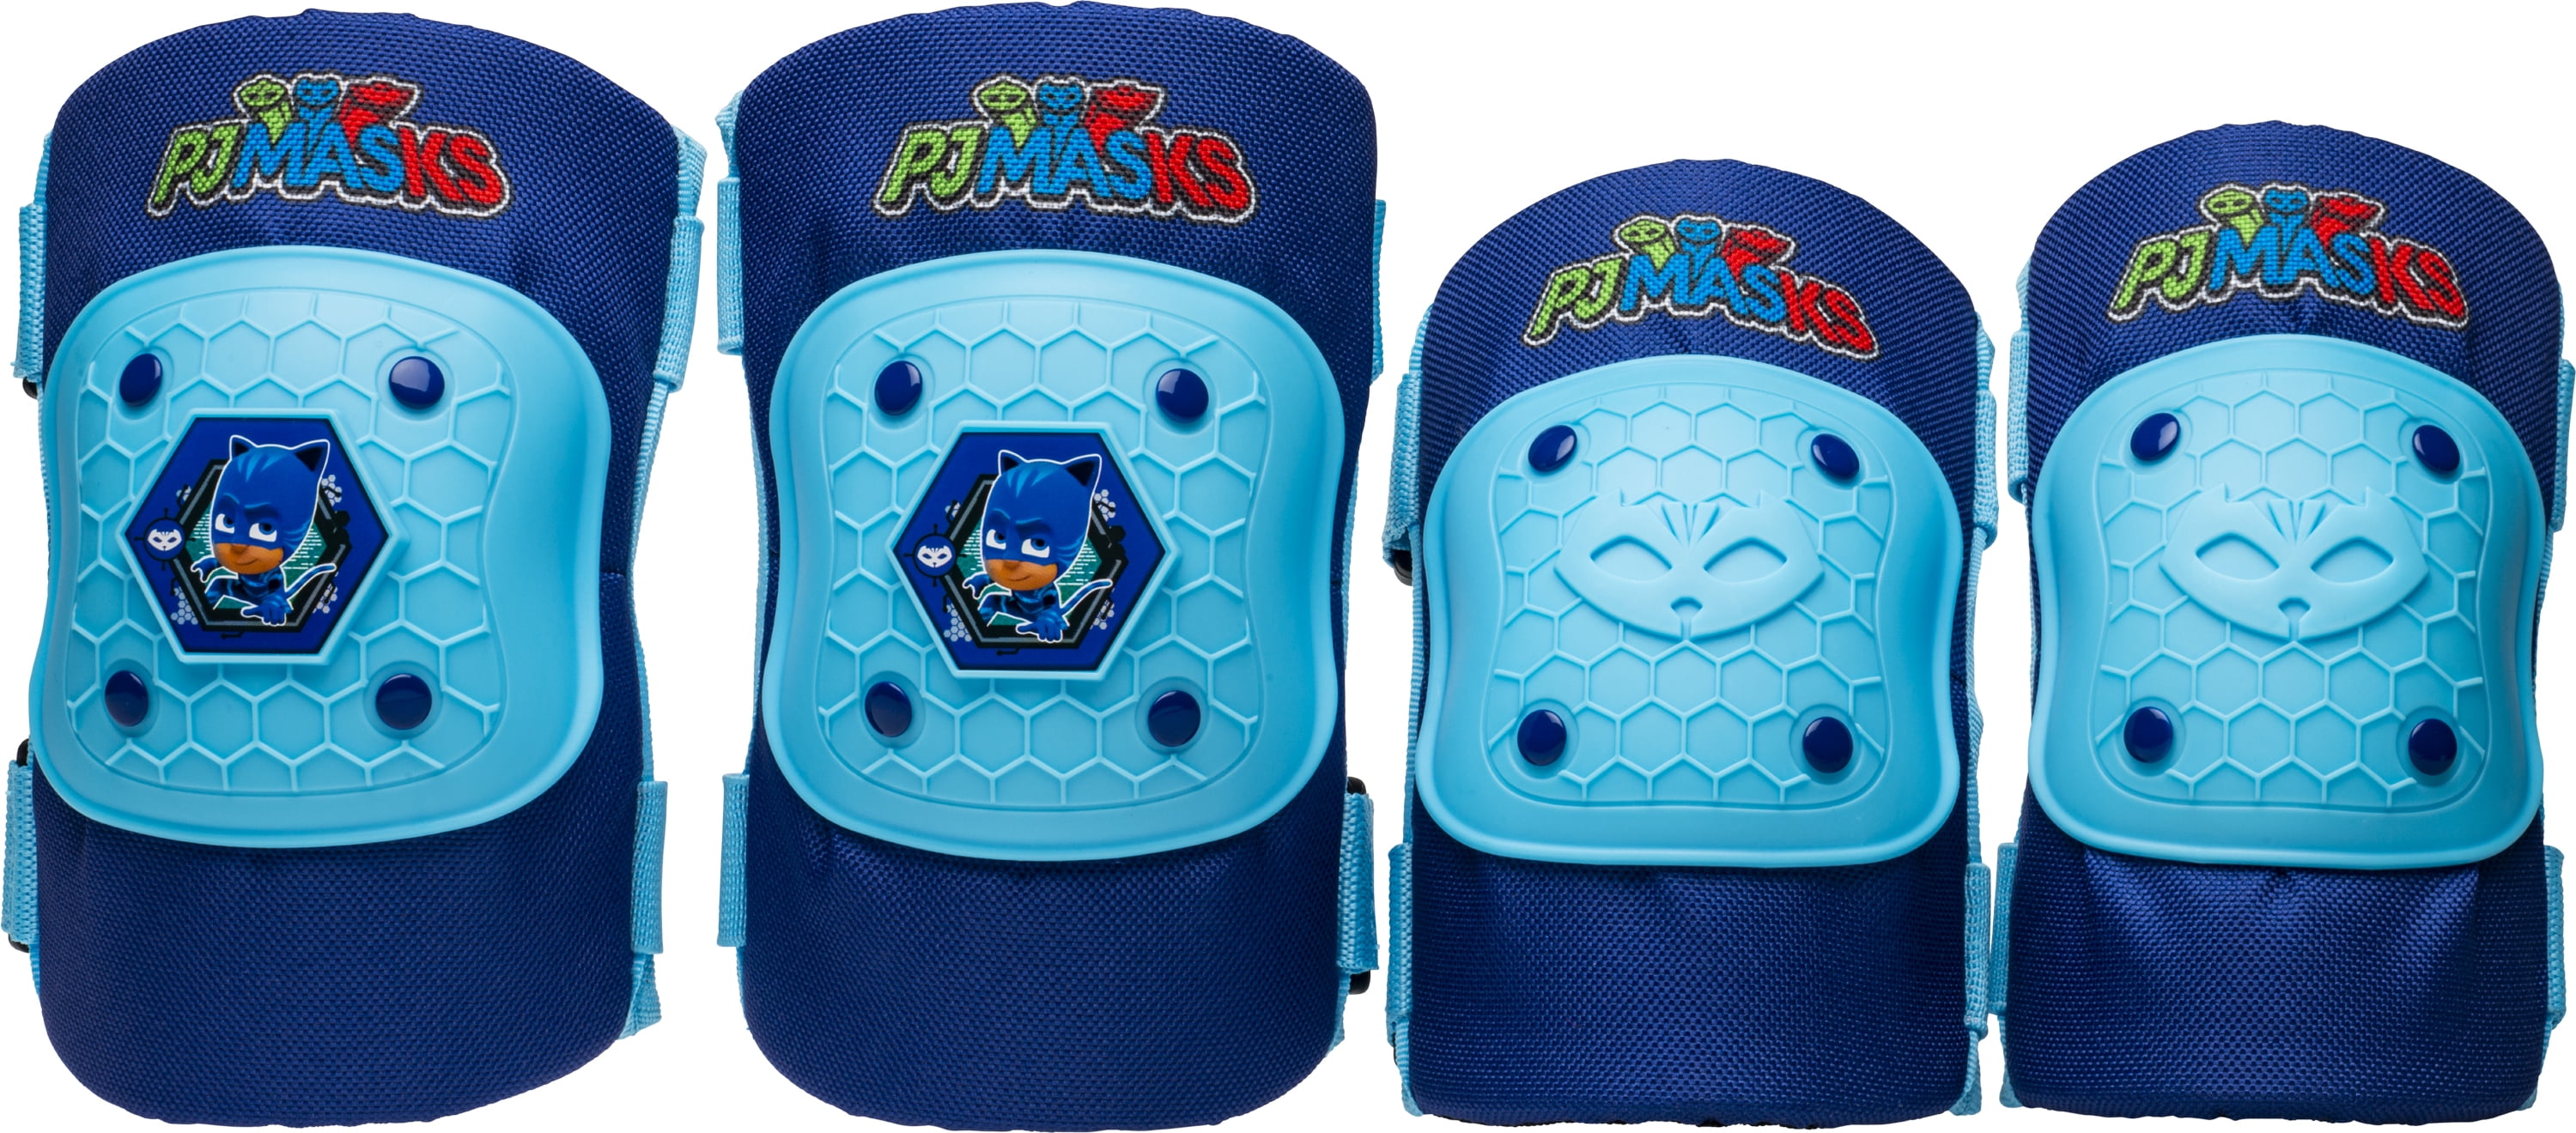 PJ Masks Toddler Kids Bicycle Helmet and Protective Pad Set SHIPS FREE 